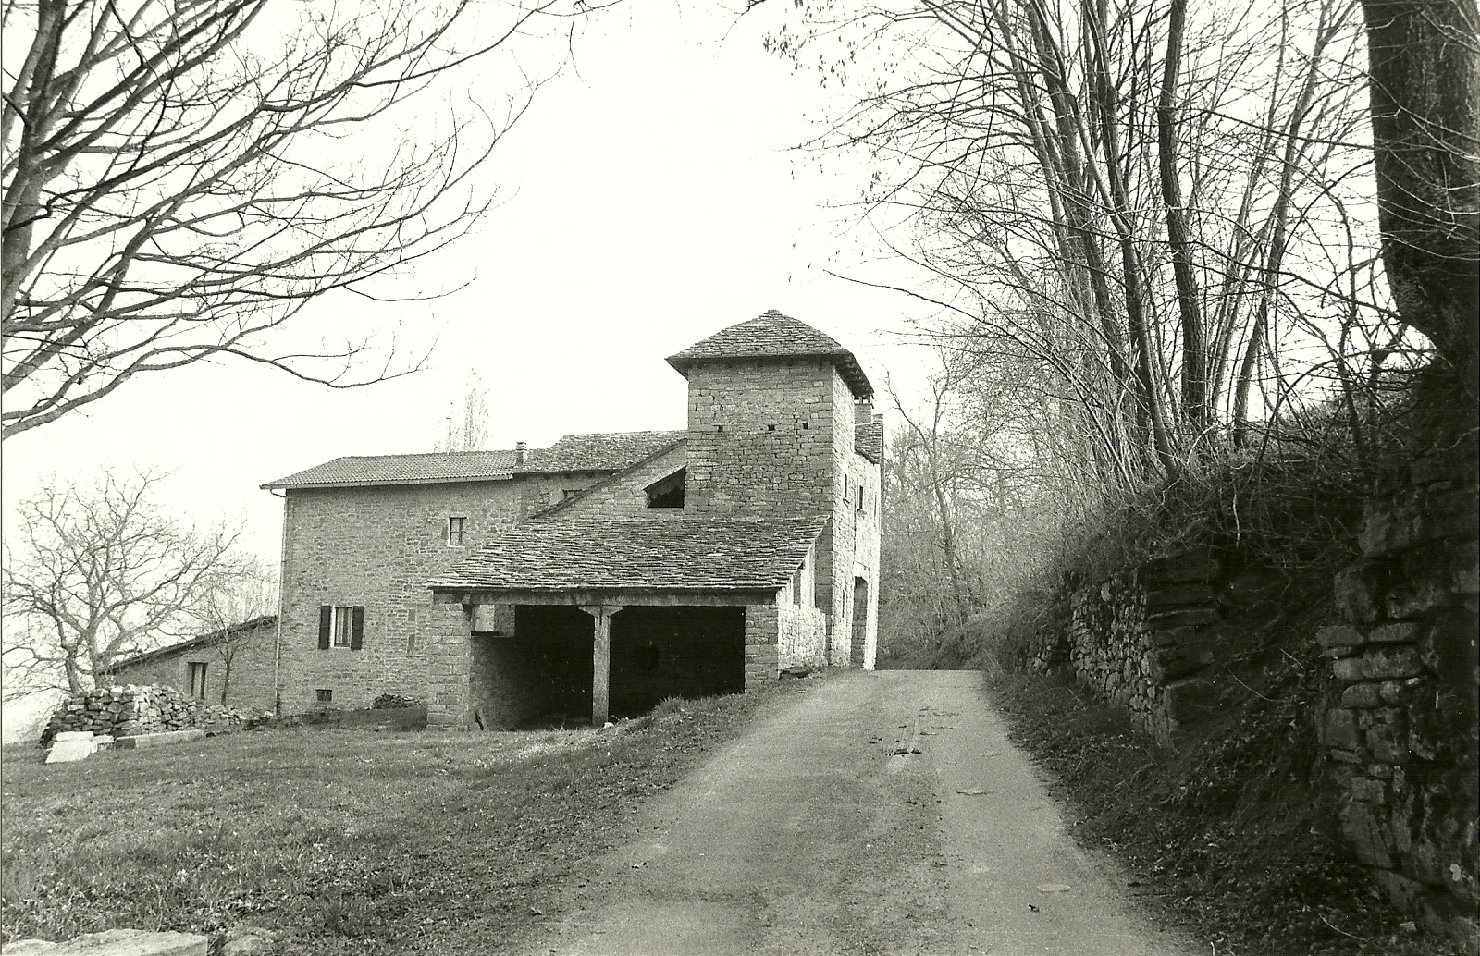 nucleo rurale munito di torre (t.l.) "Case Fattori" (nucleo, rurale) - Neviano degli Arduini (PR) 